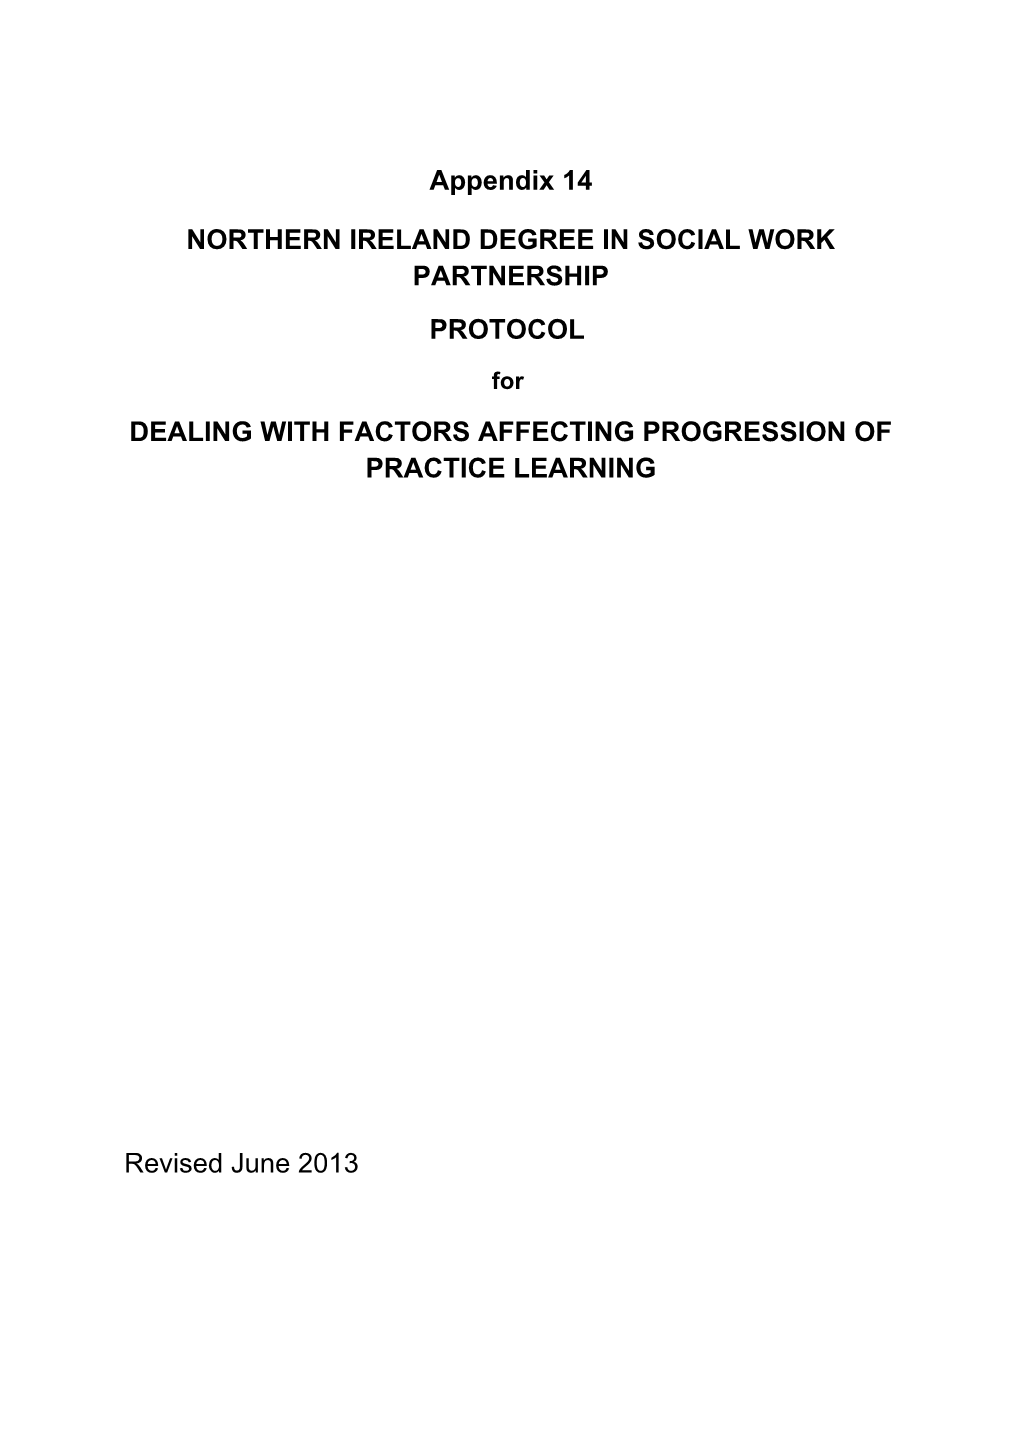 Northern Ireland Degree in Social Work Partnership